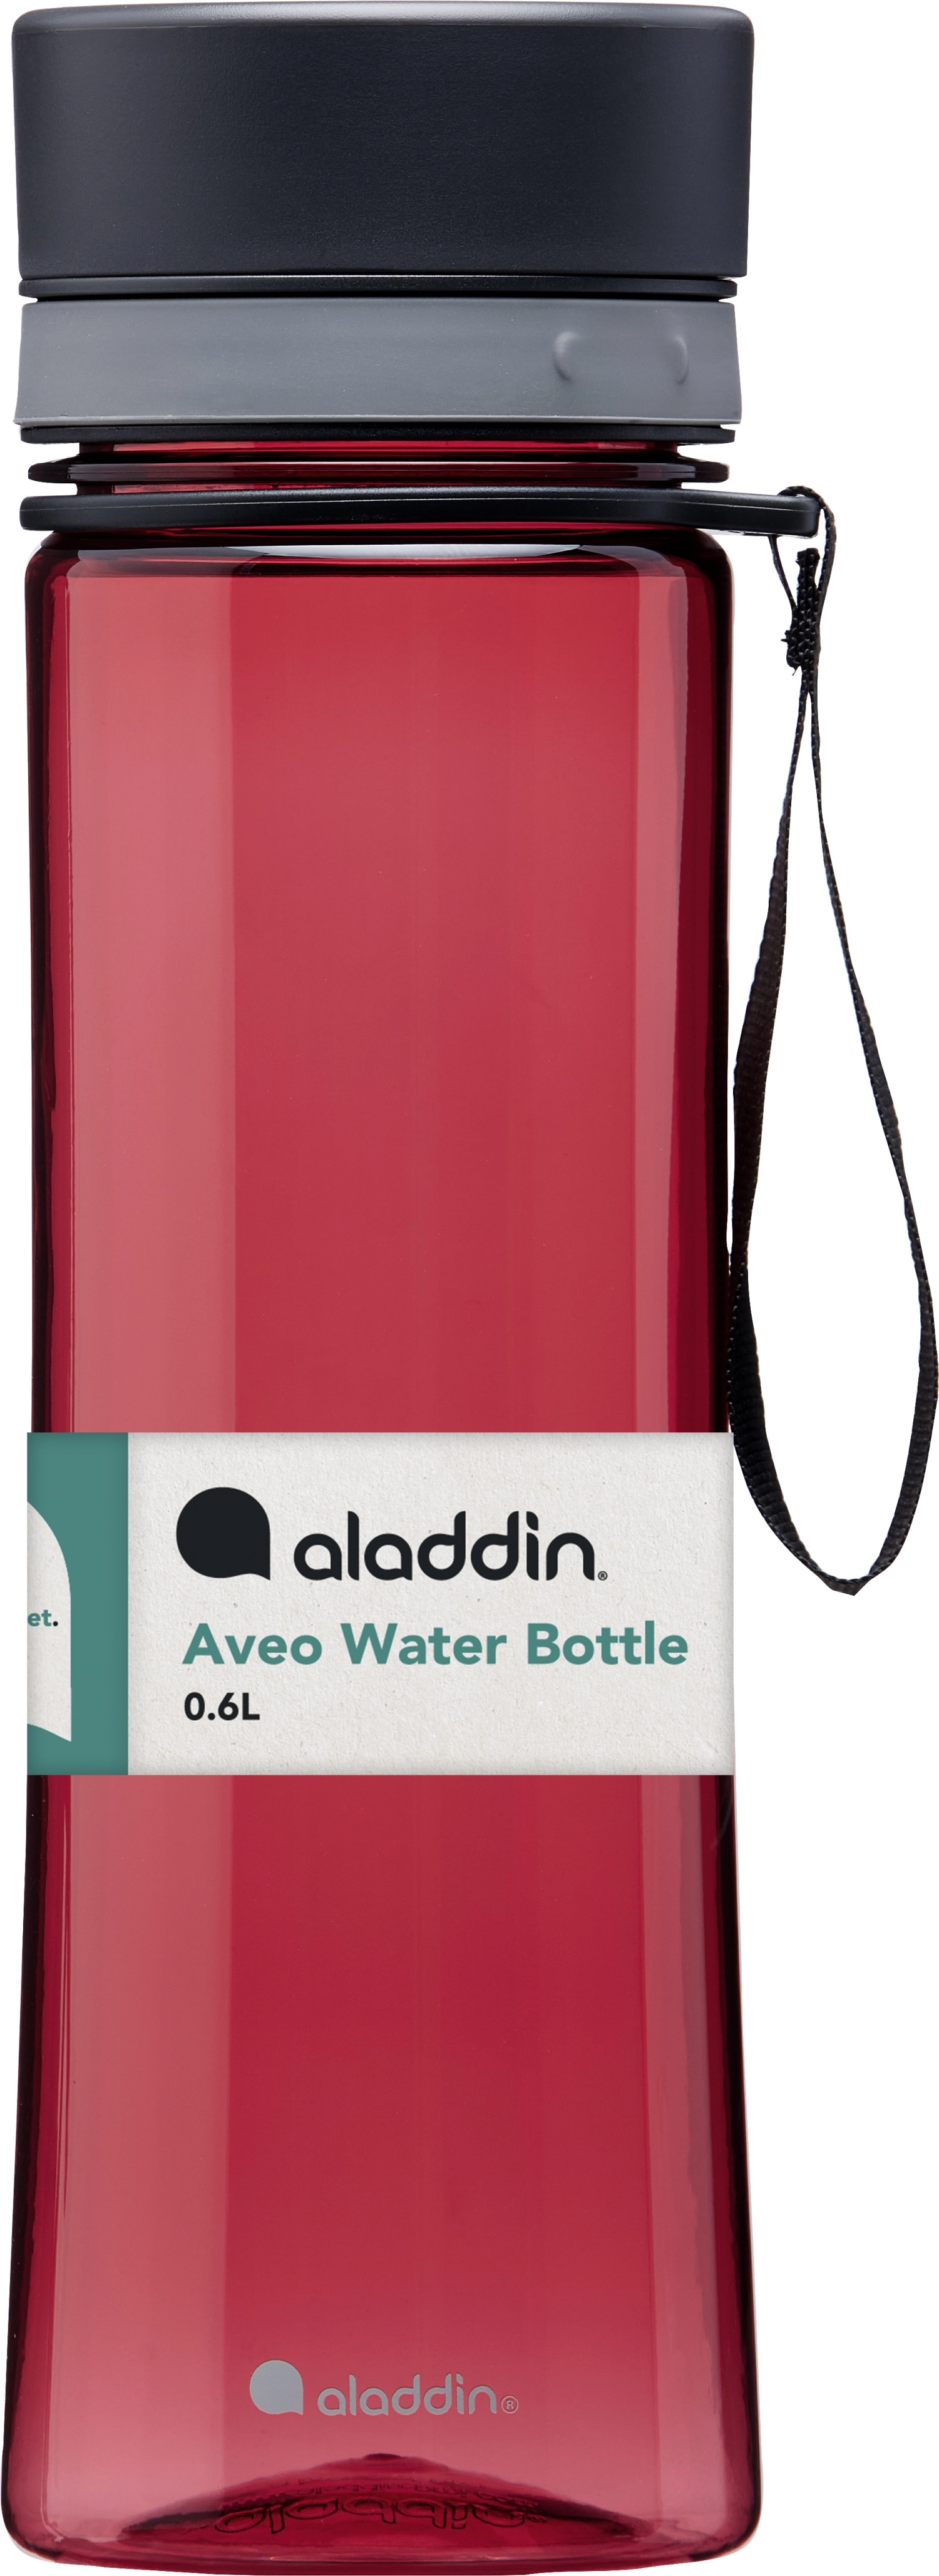 Aveo Water Bottle 0.6L Cherry Red